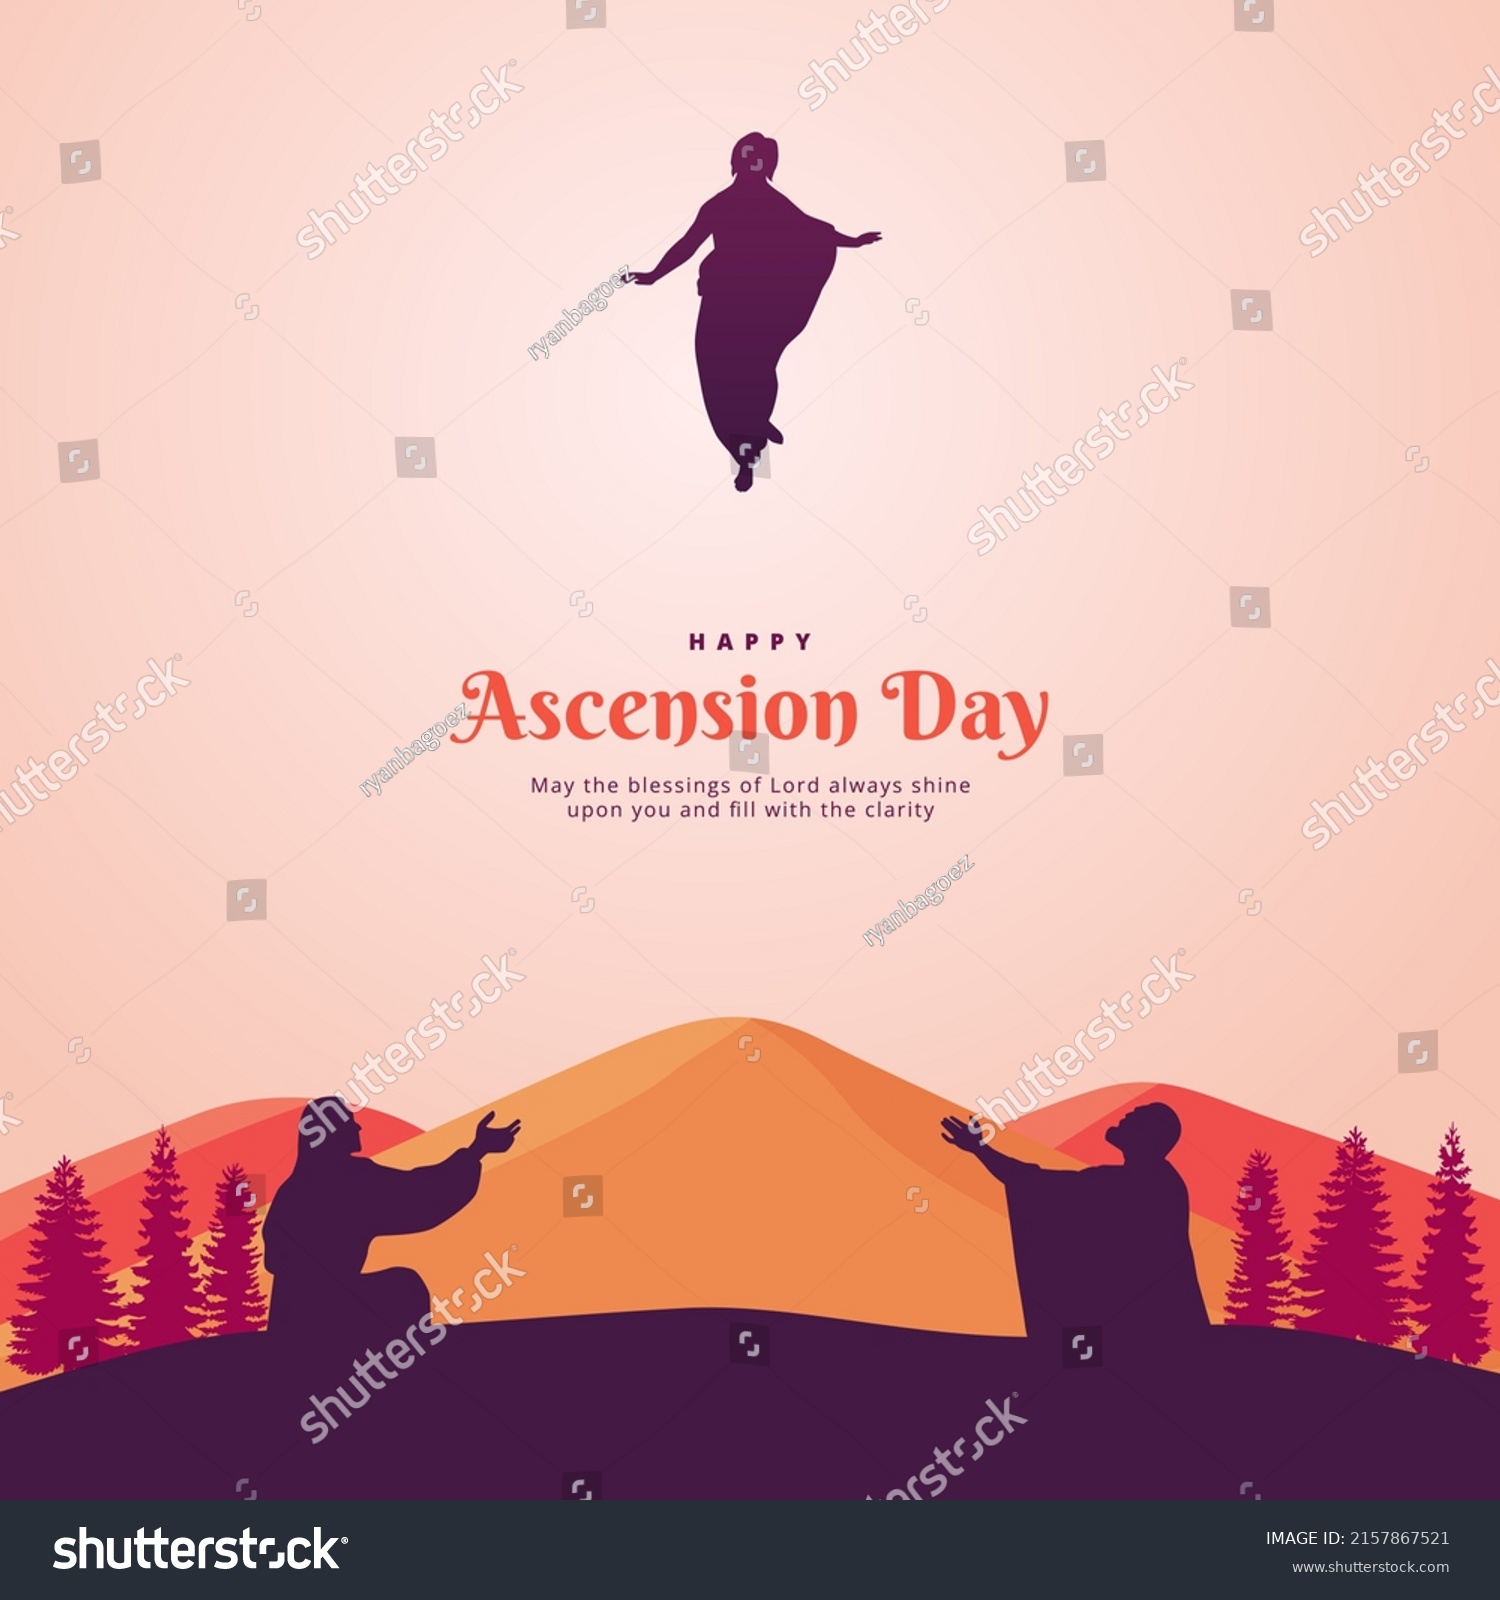 SVG of Happy Ascension Day with Jesus Silhouette, People, Trees, Mountains Vector Illustration. Selamat hari kenaikan Isa Almasih svg